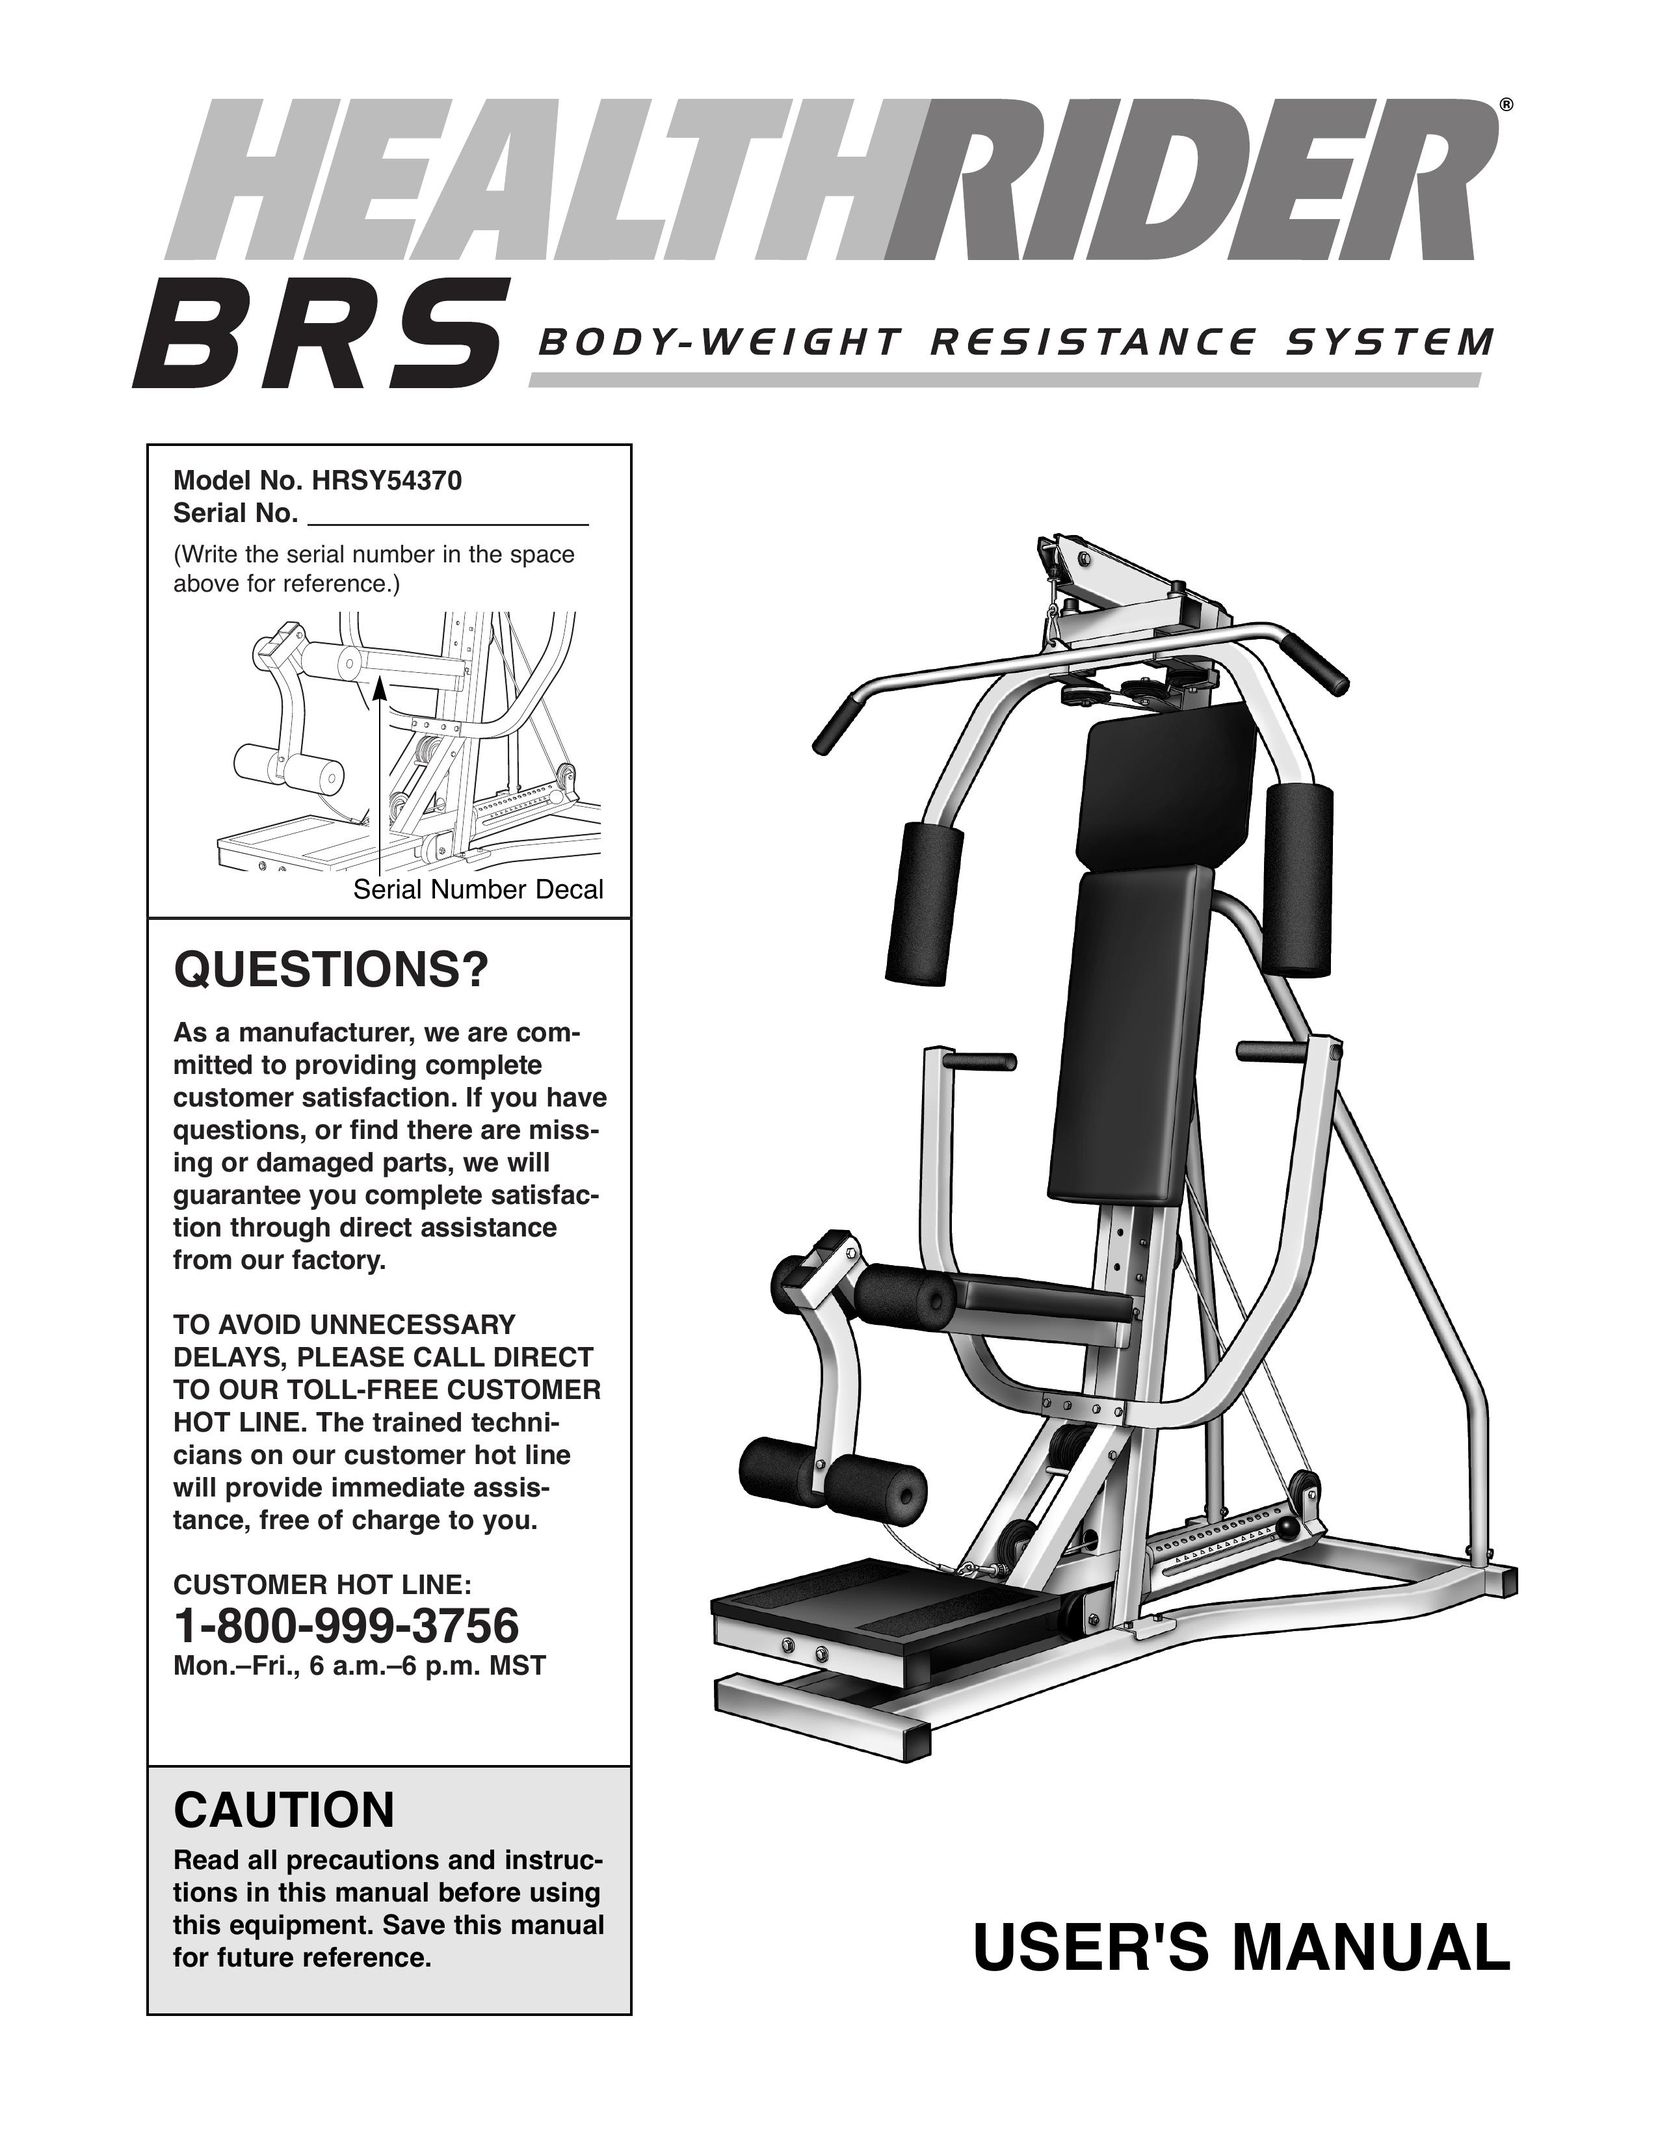 Healthrider HRSY54370 Home Gym User Manual